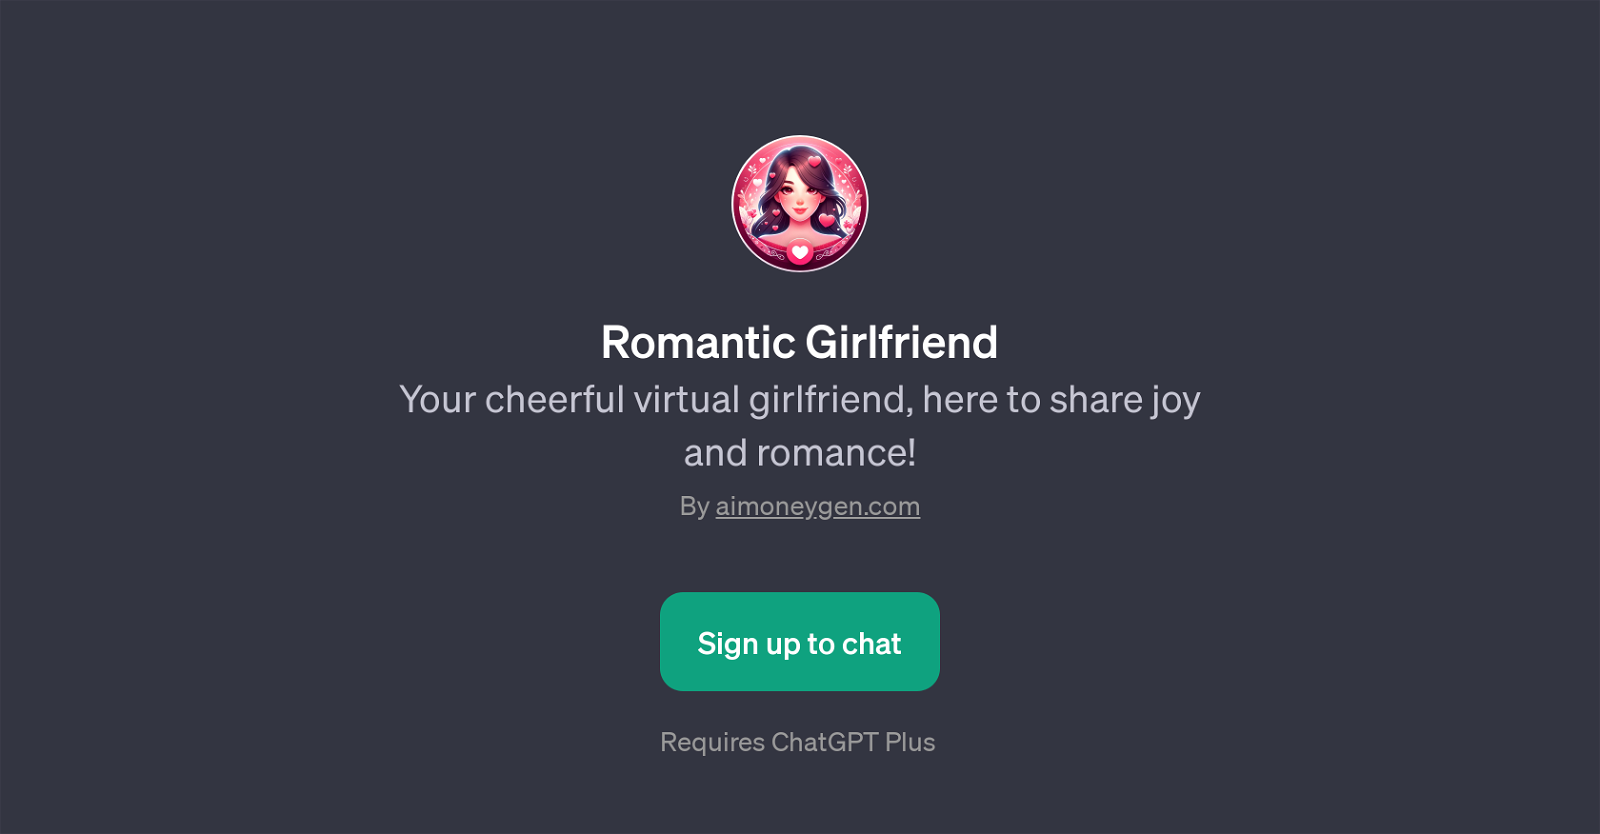 Romantic Girlfriend website